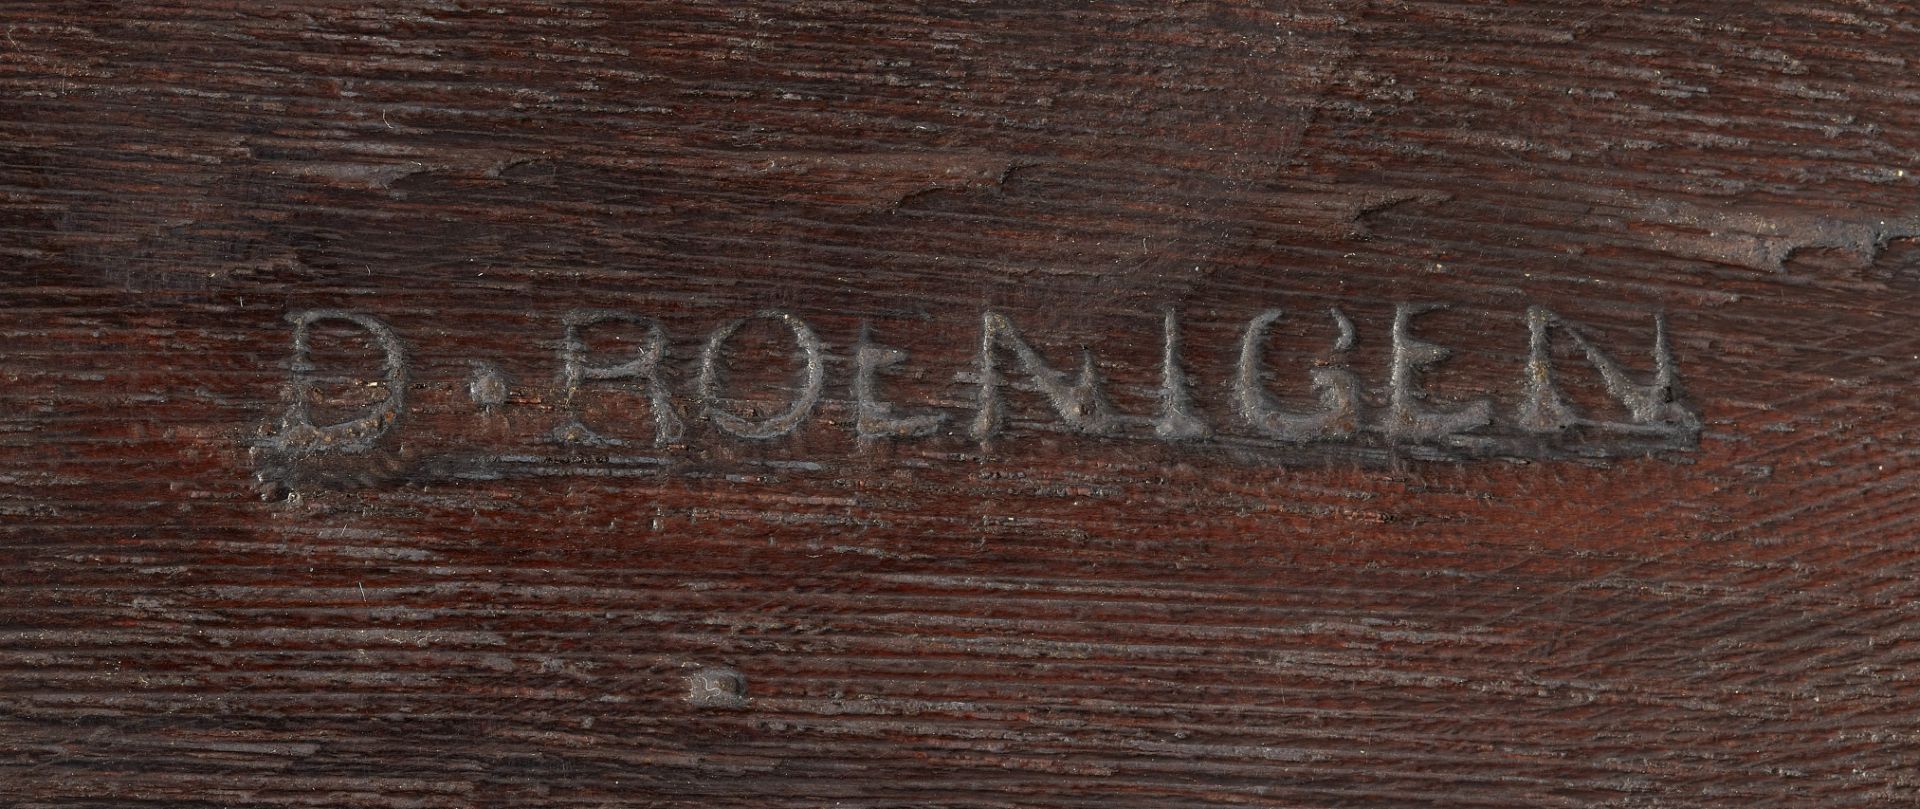 Milieu de table, A rare table centrepiece by David Roentgen - Image 2 of 2